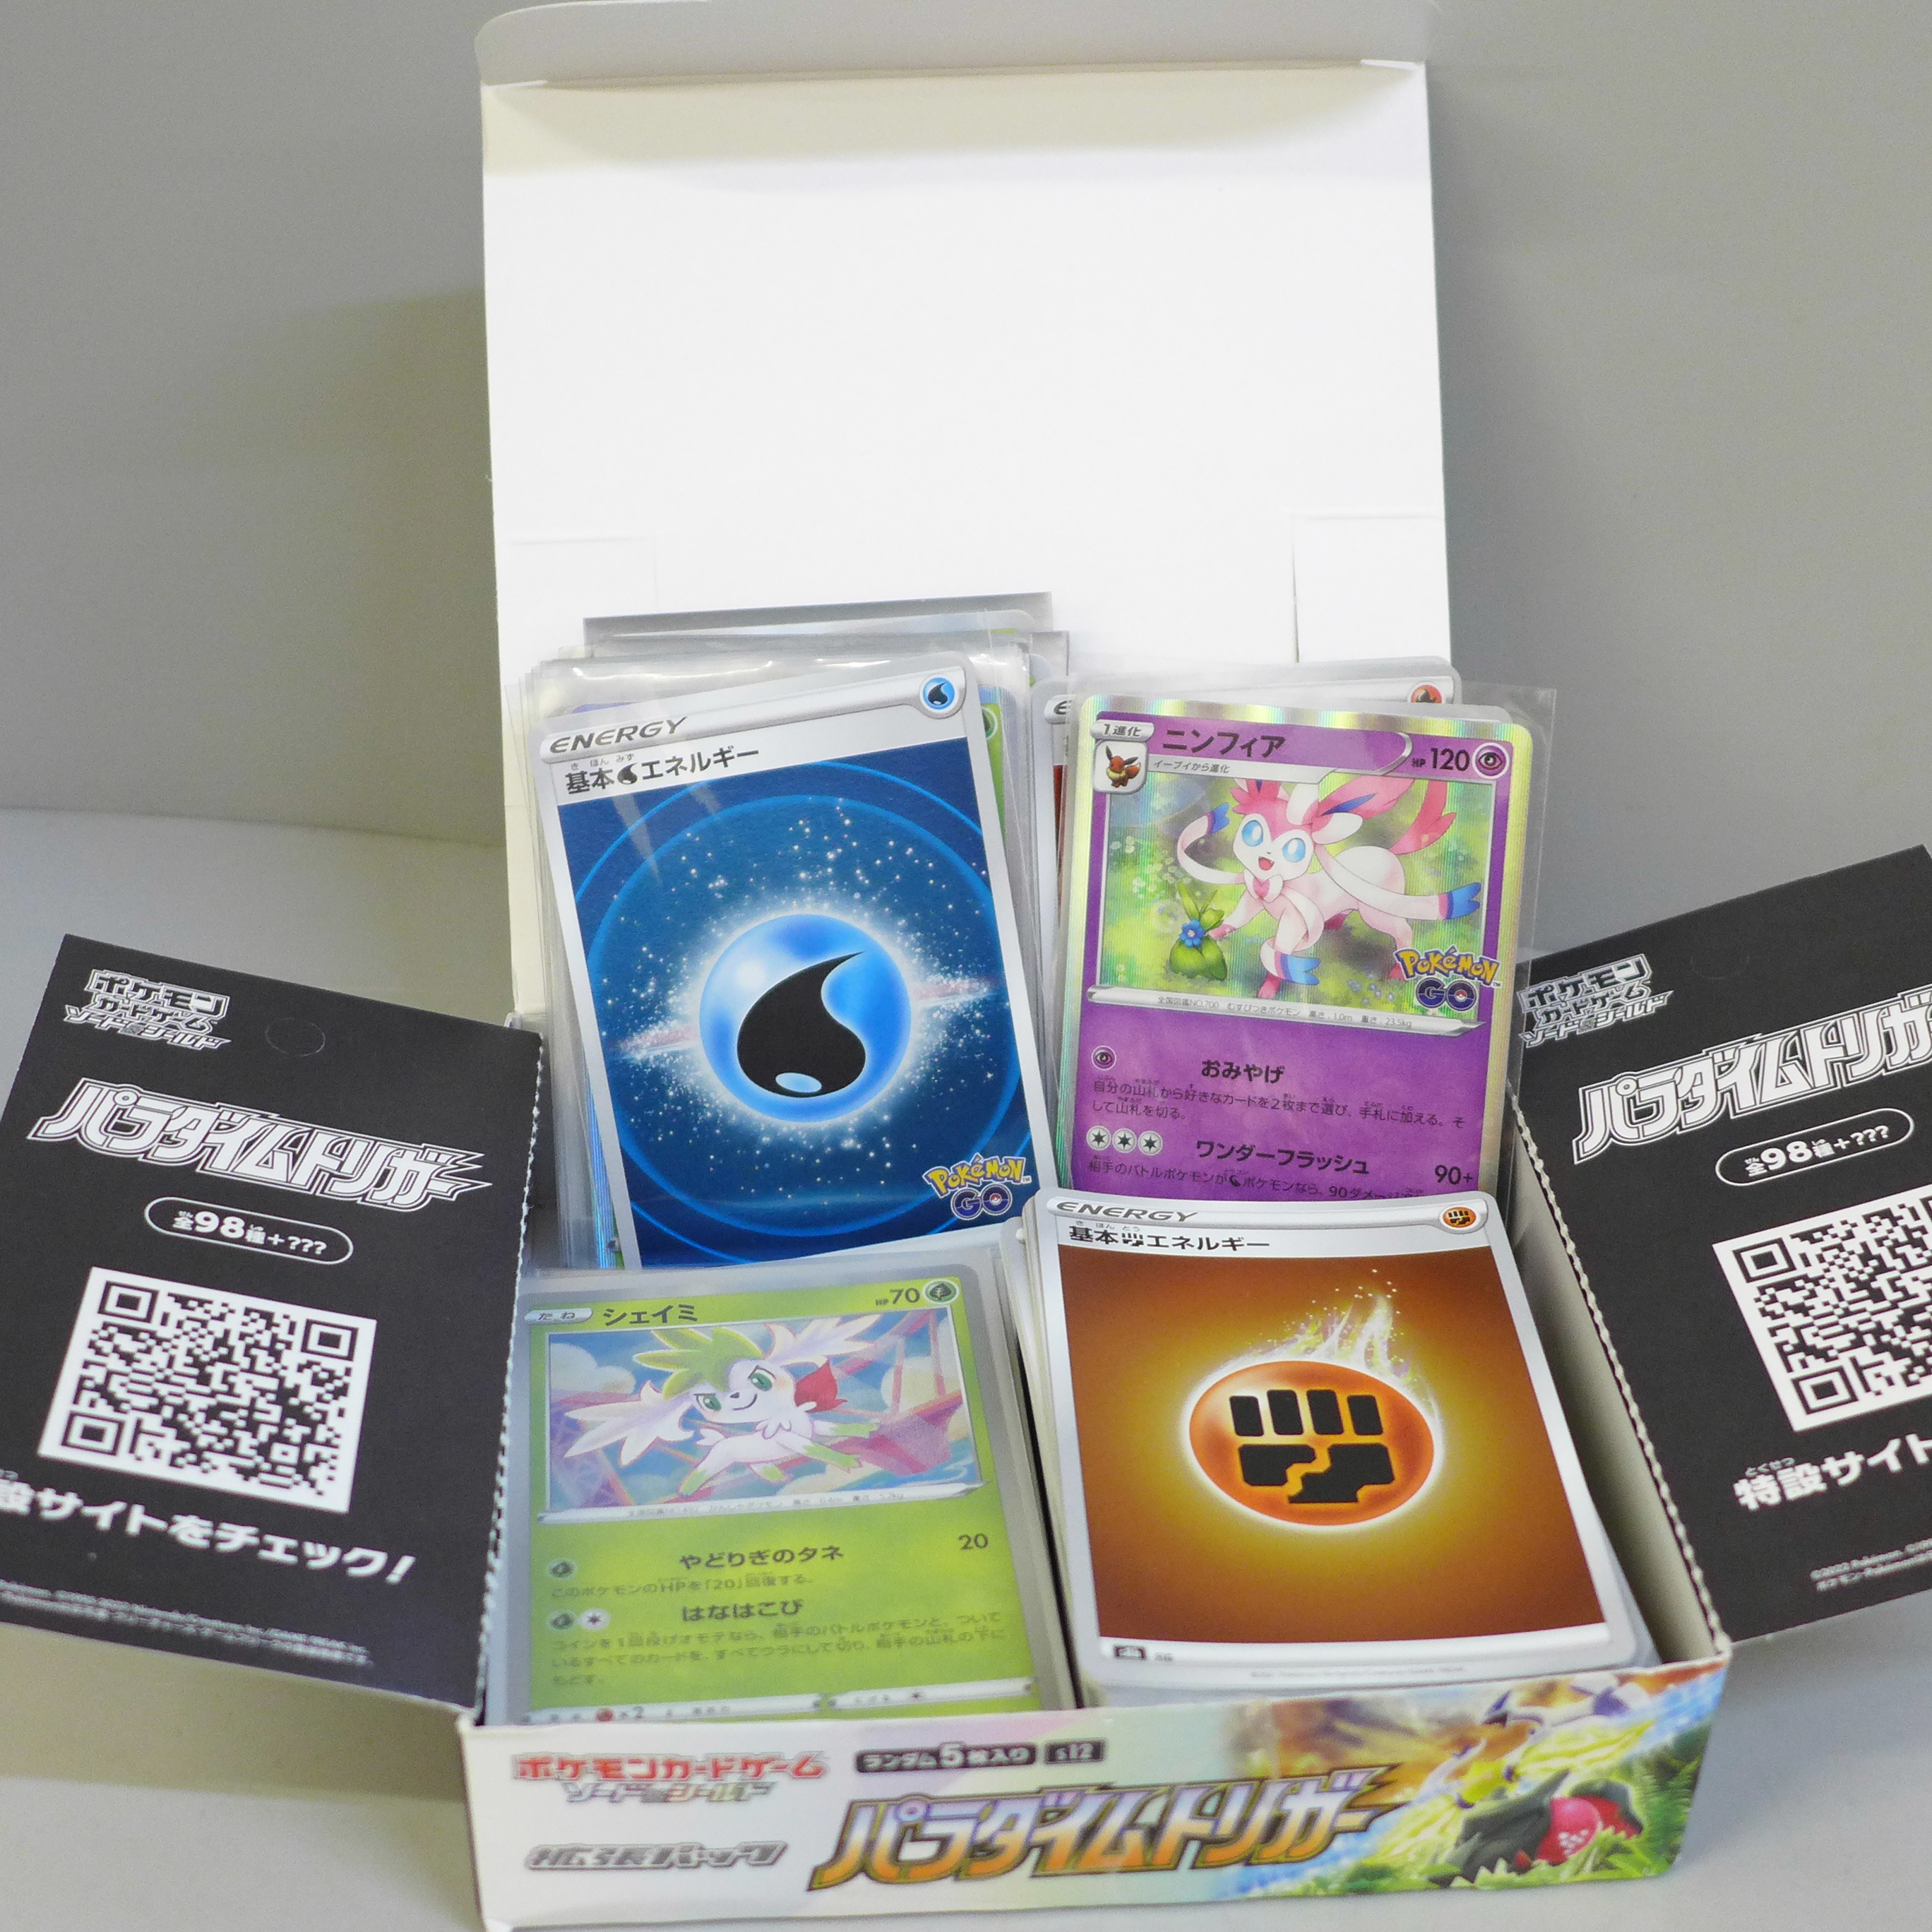 150 Japanese Pokemon cards, mainly holos